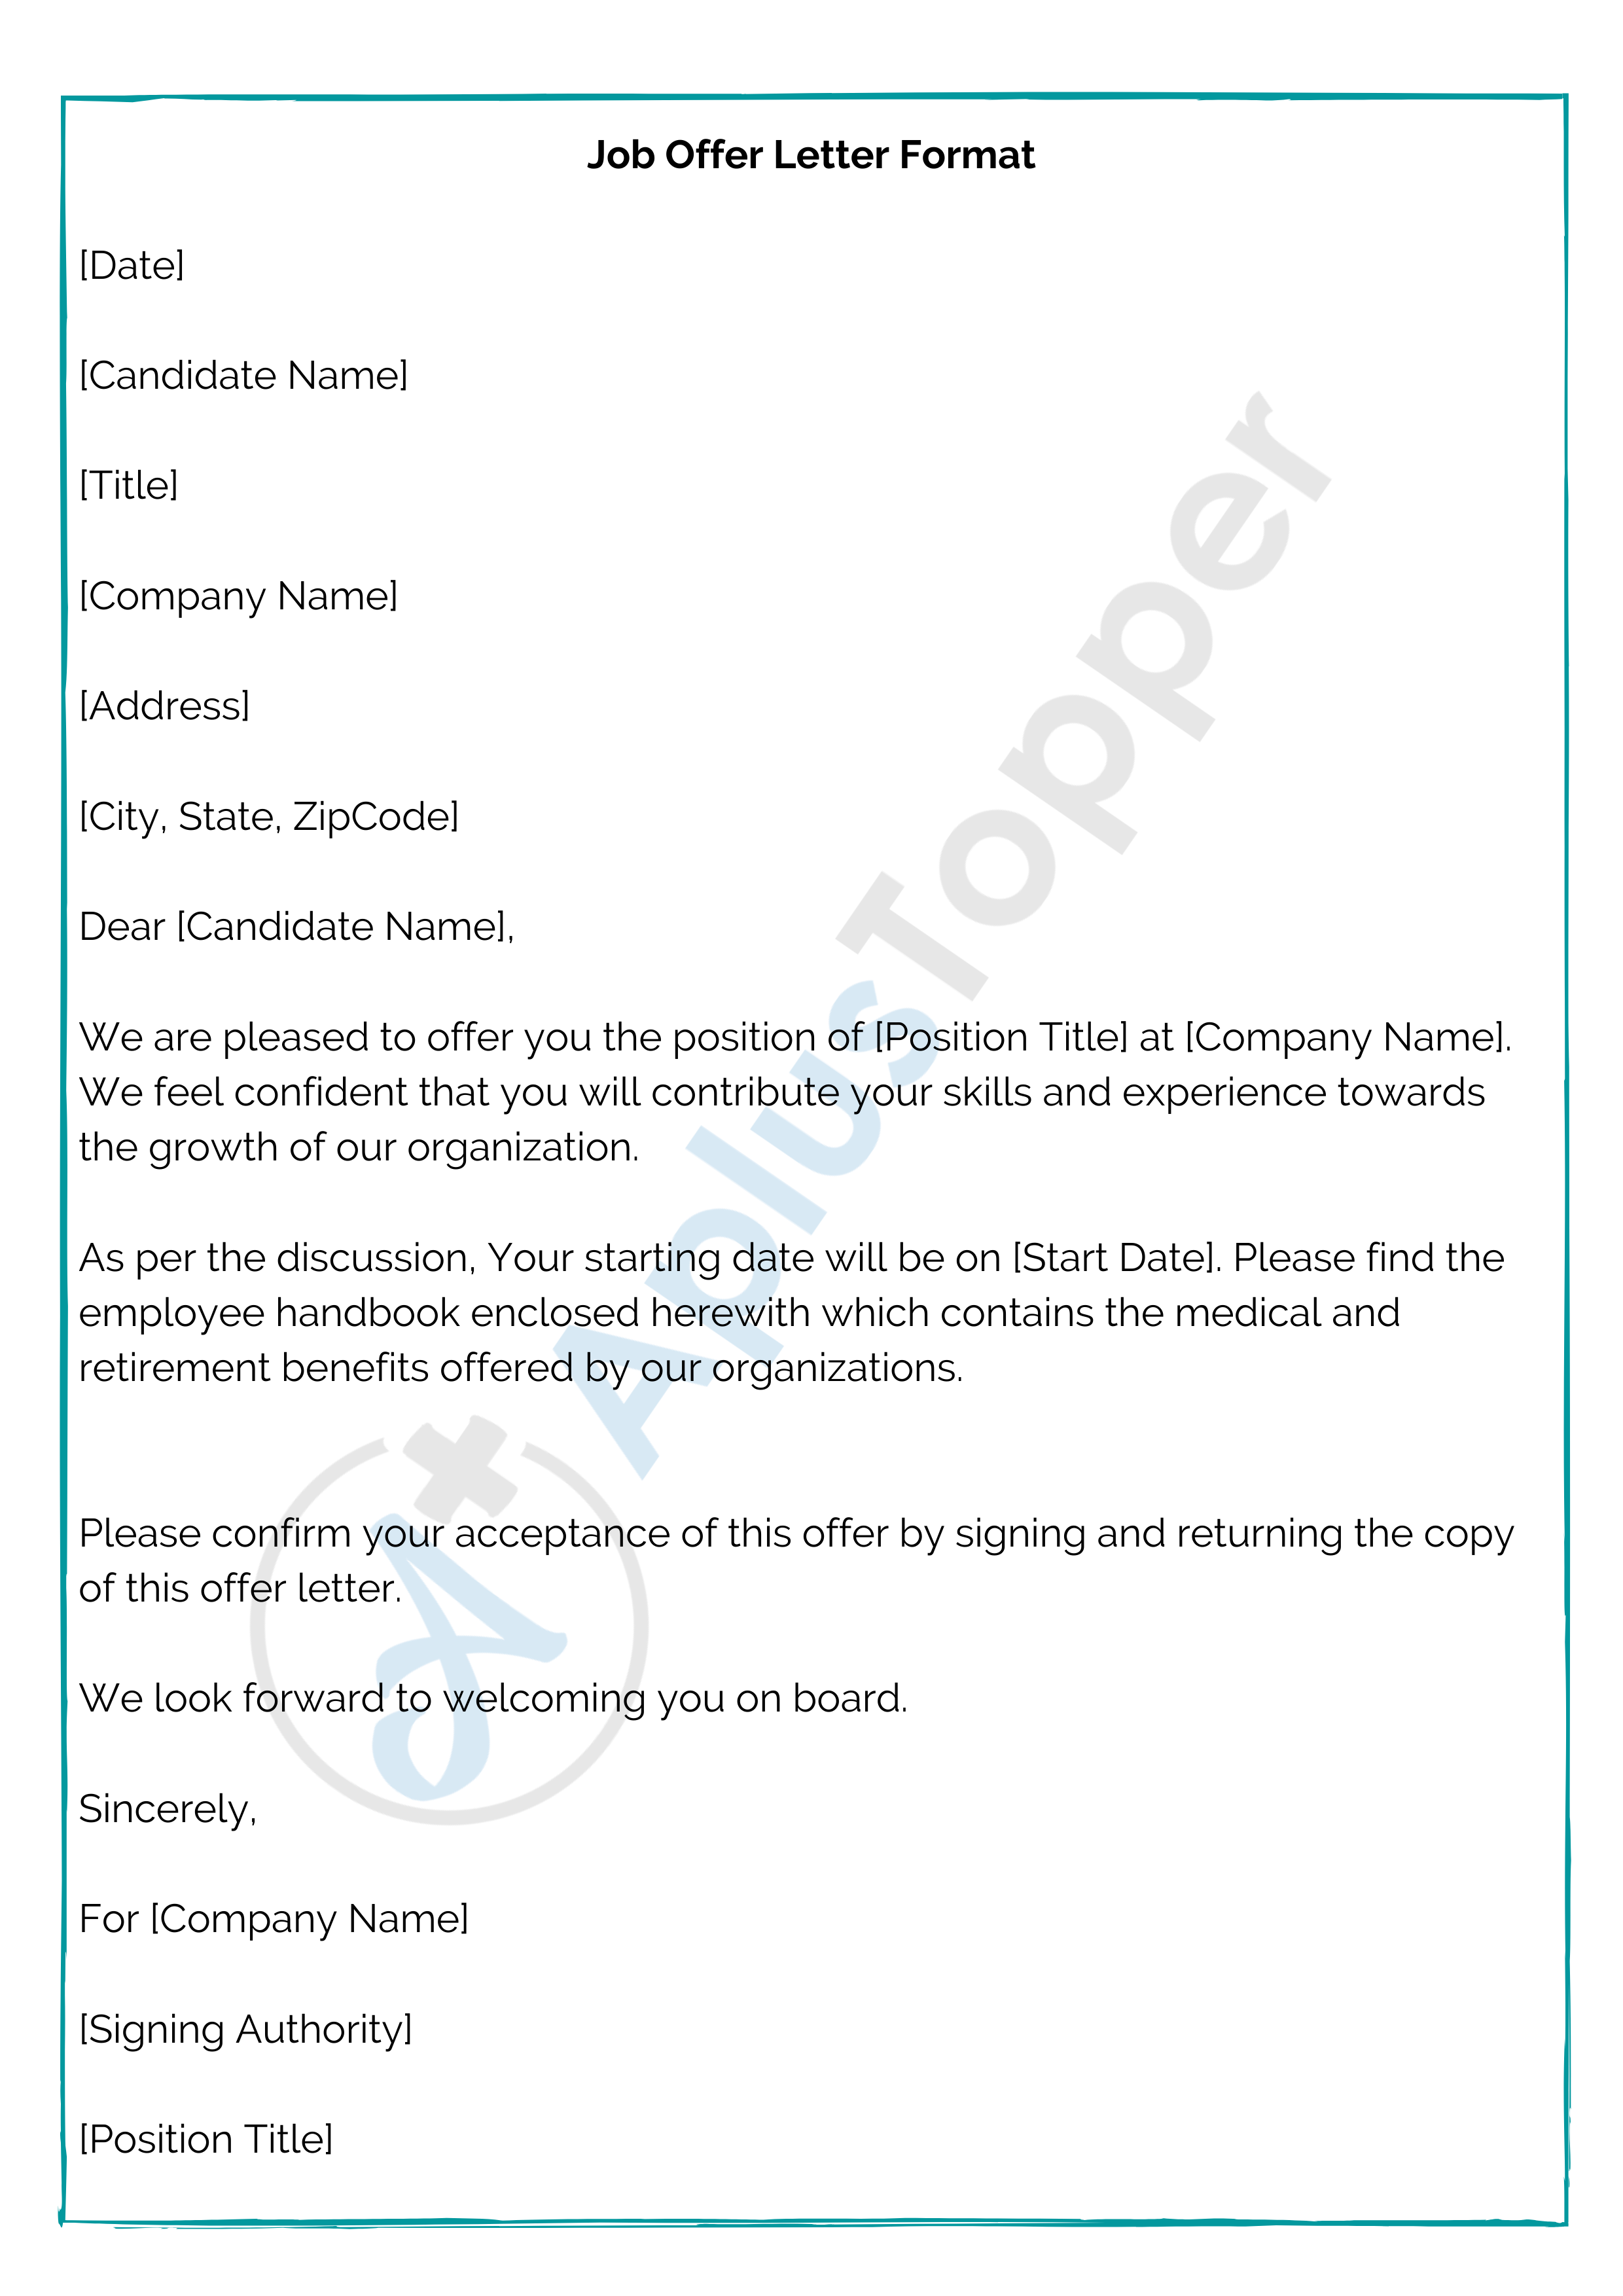 Offer Letter Format | Job Offer Letter Format, Samples, Template